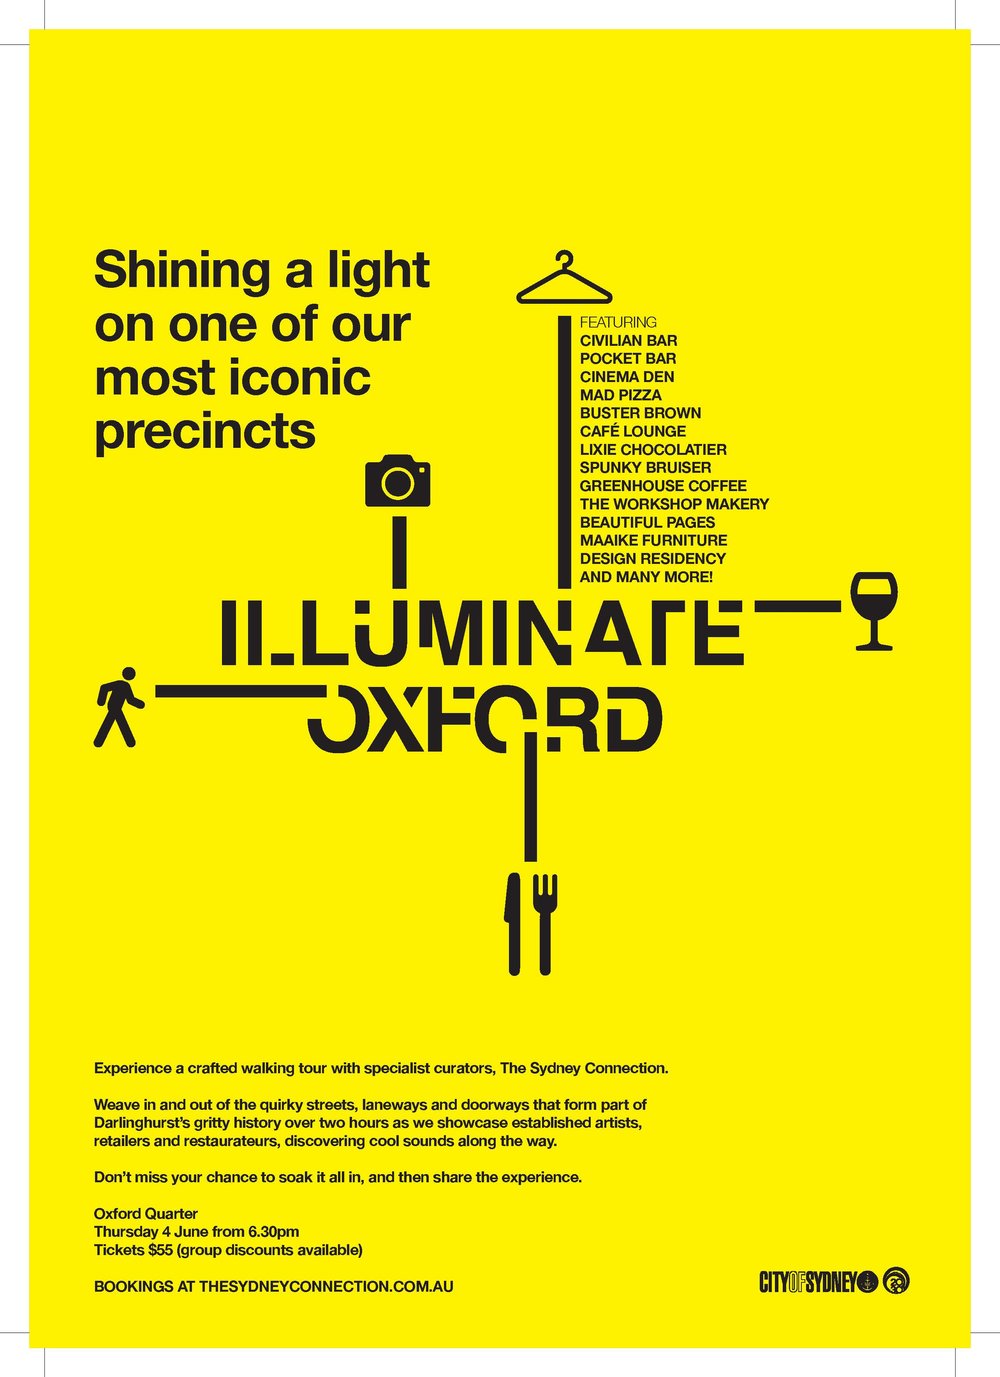 Illuminate+Oxford+Darlinghurst+2015